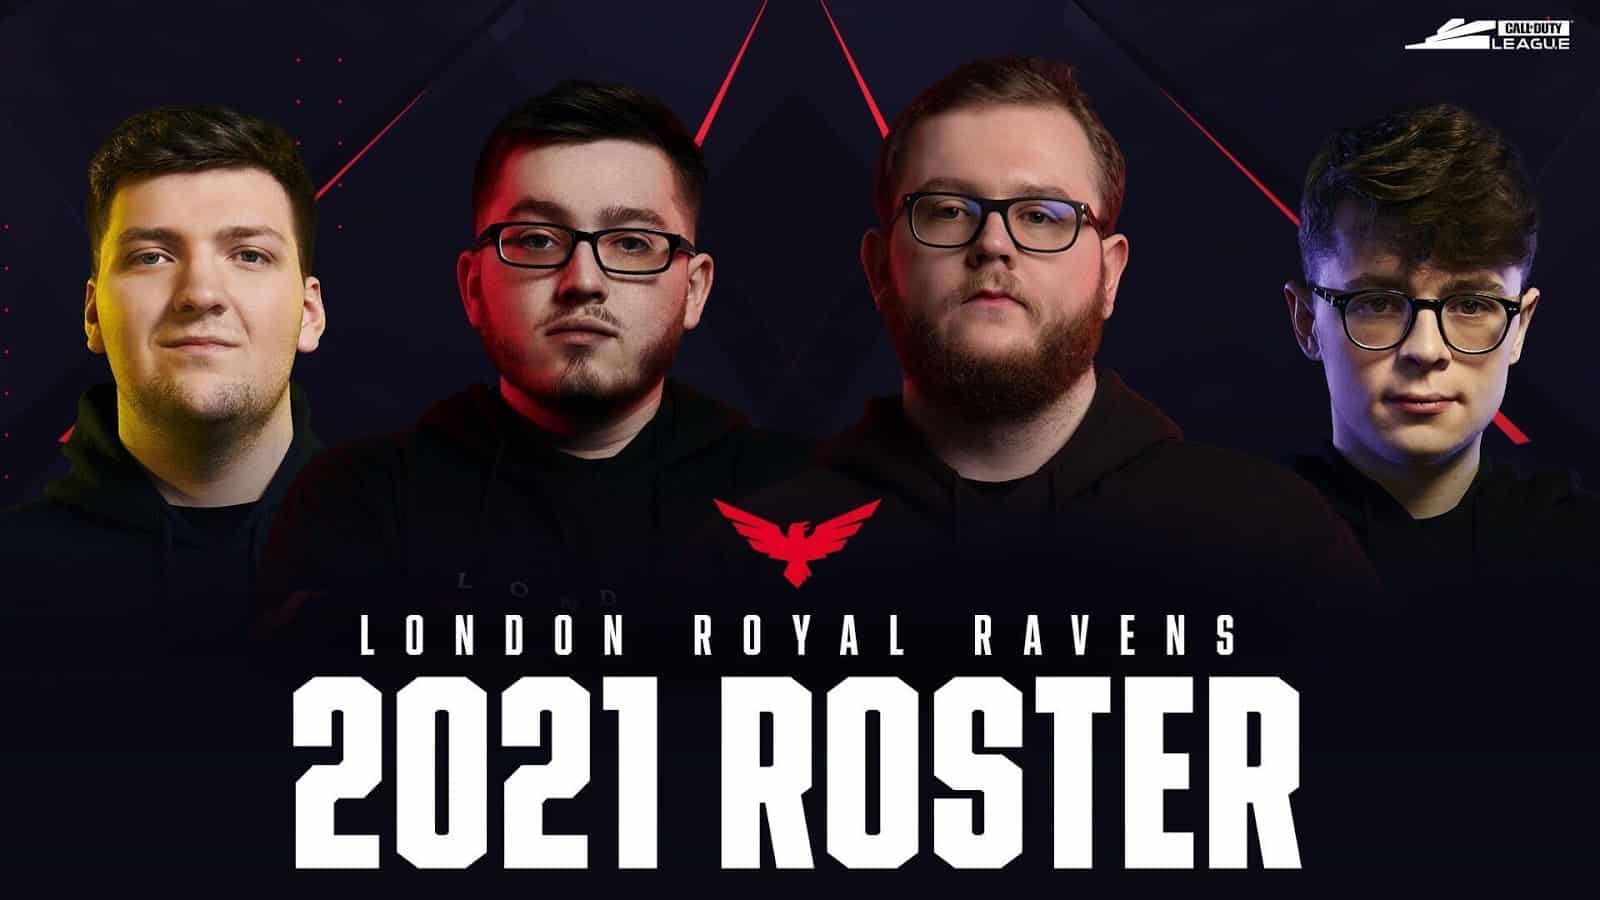 London Royal Ravens announce roster ahead of CDL 2021 season